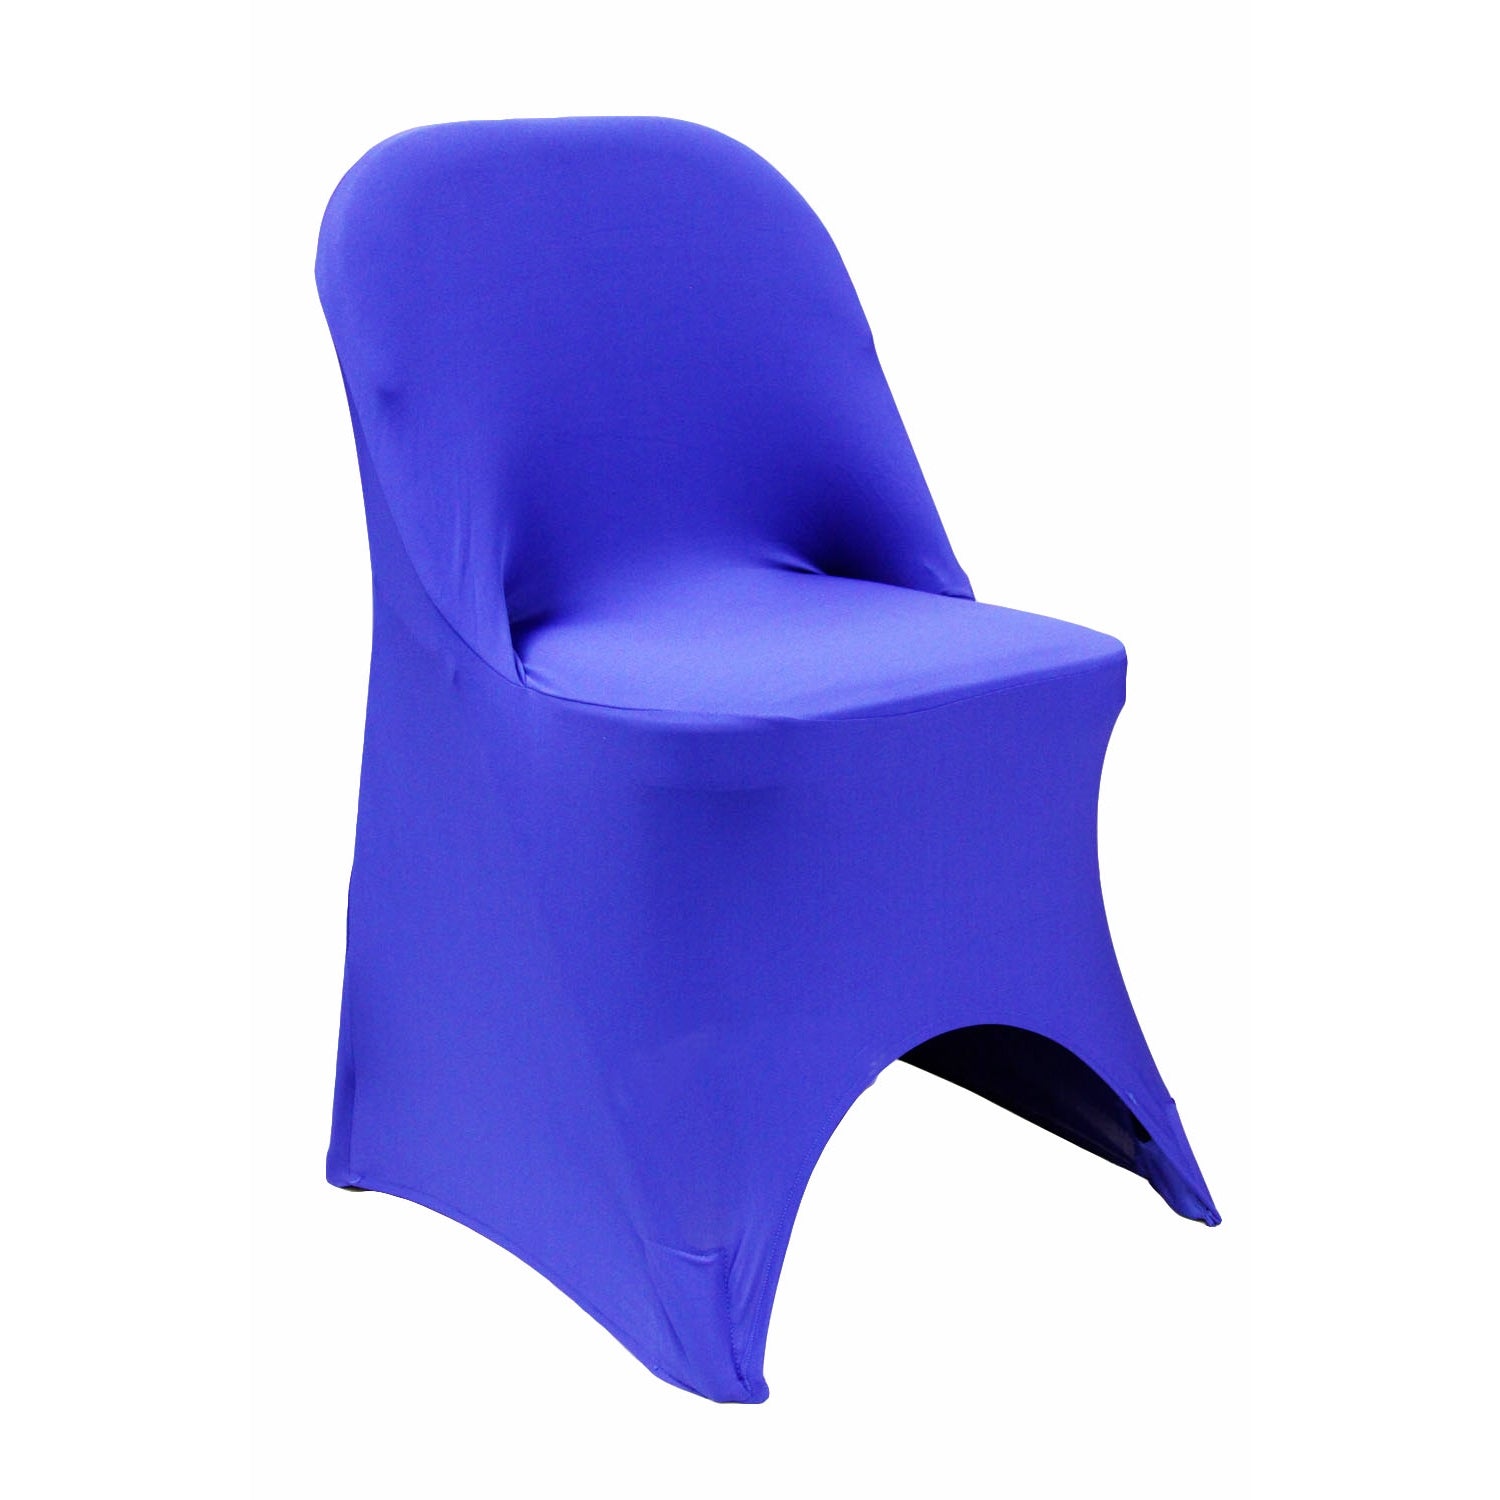 Folding Spandex Chair Cover Royal Blue at CV Linens